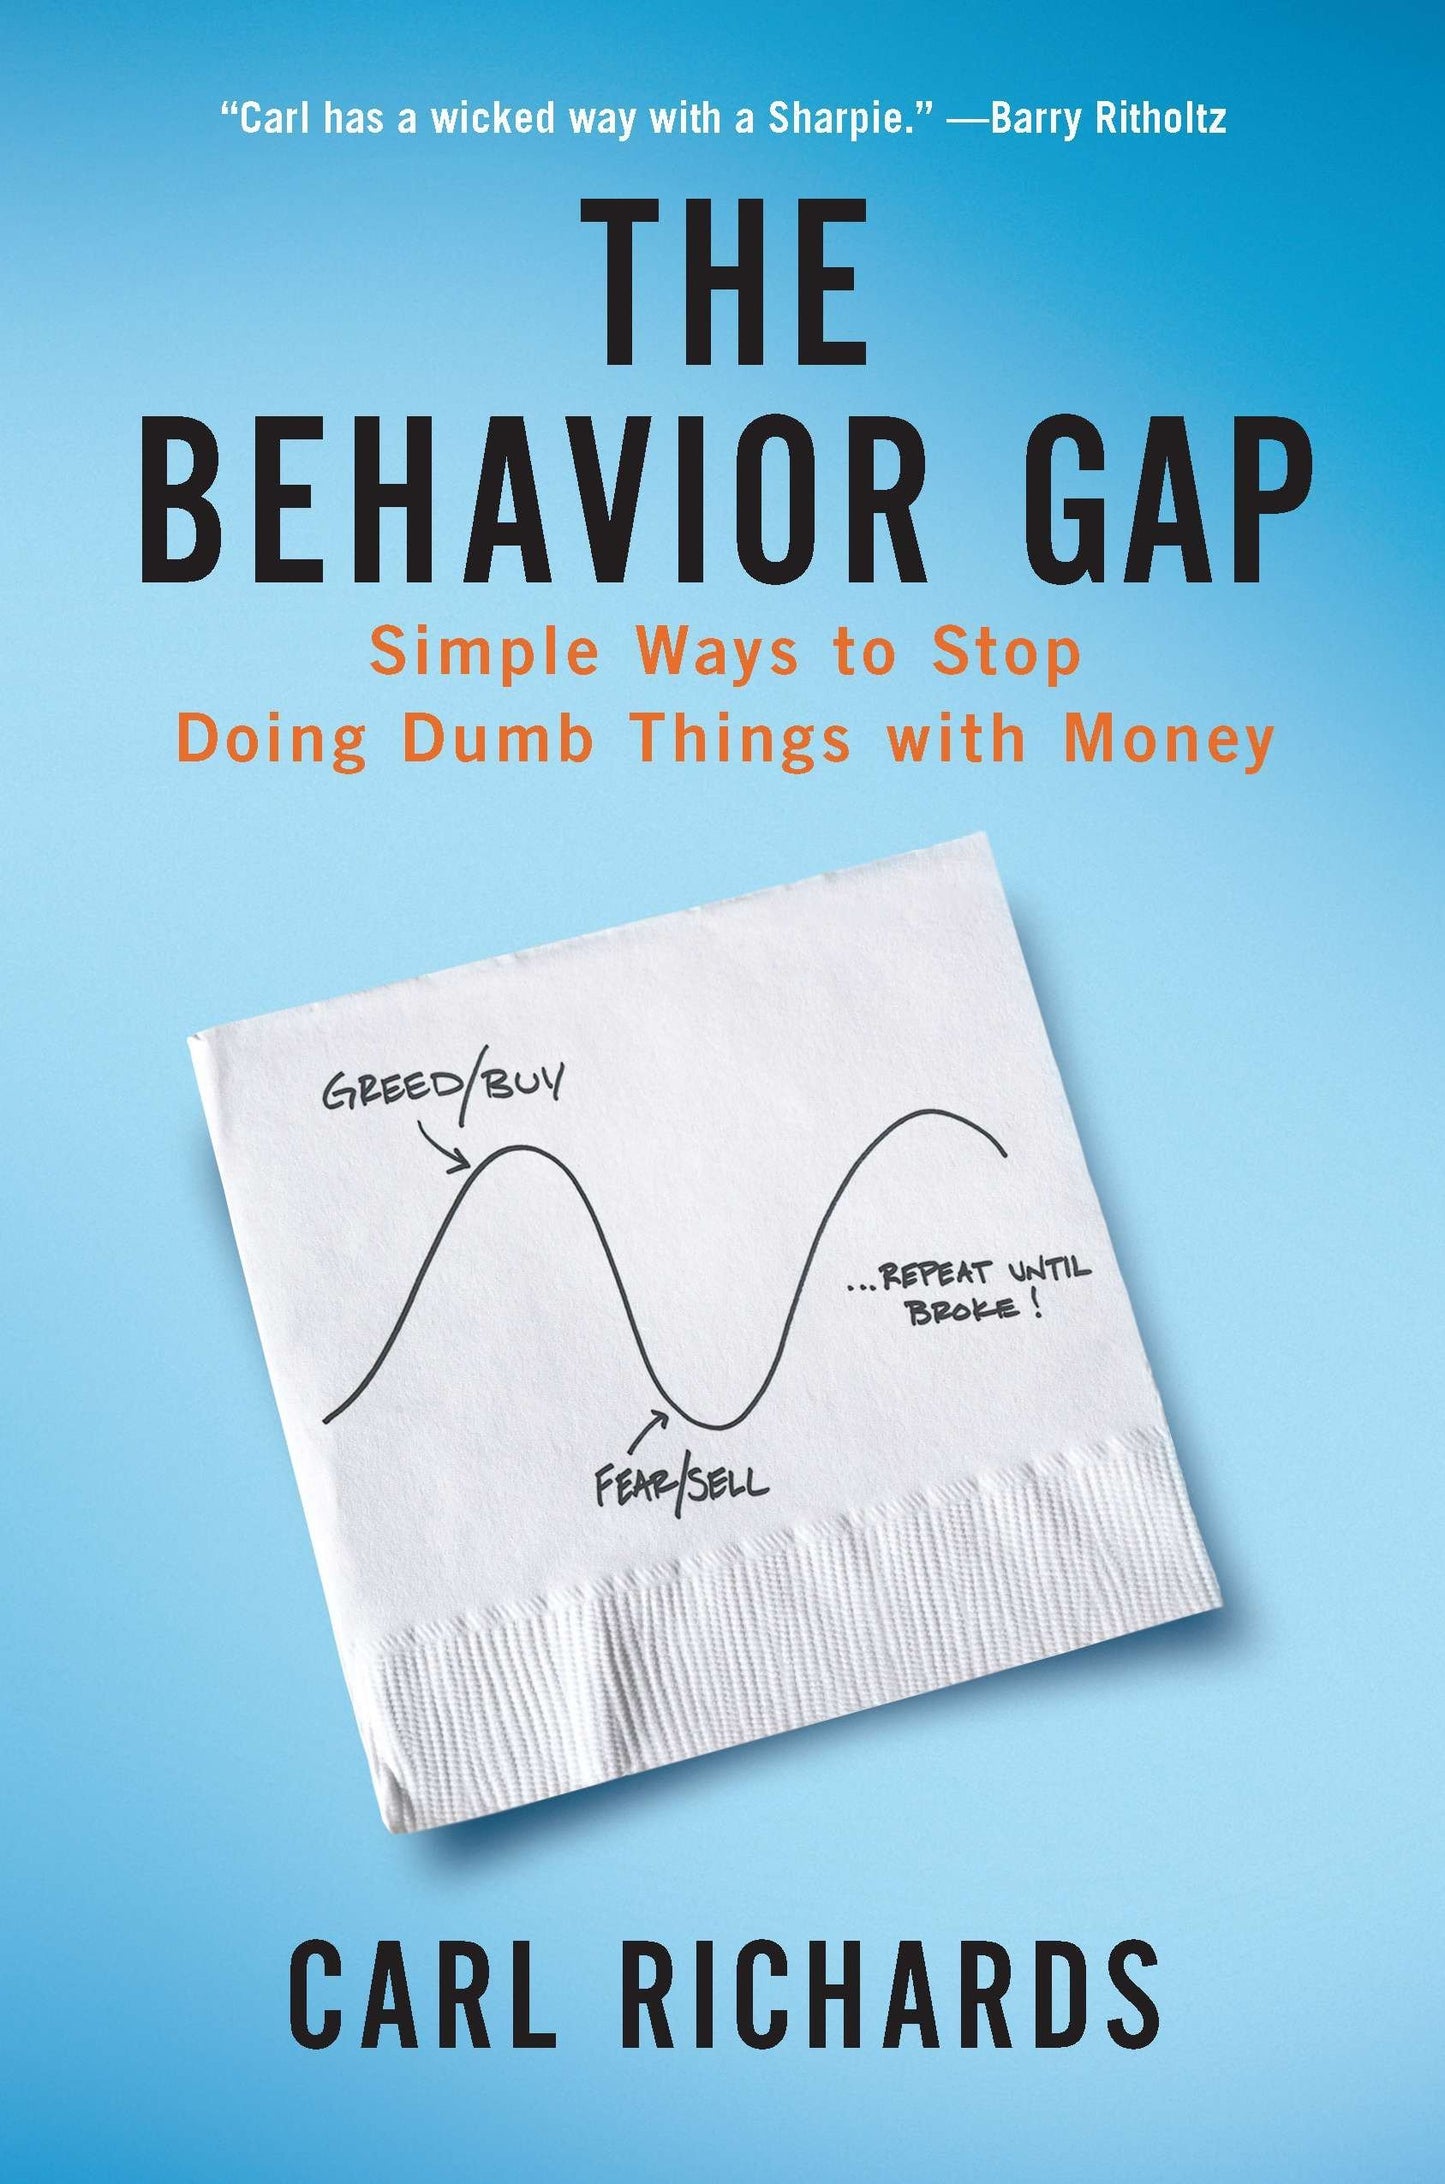 Signed copy of The Behavior Gap